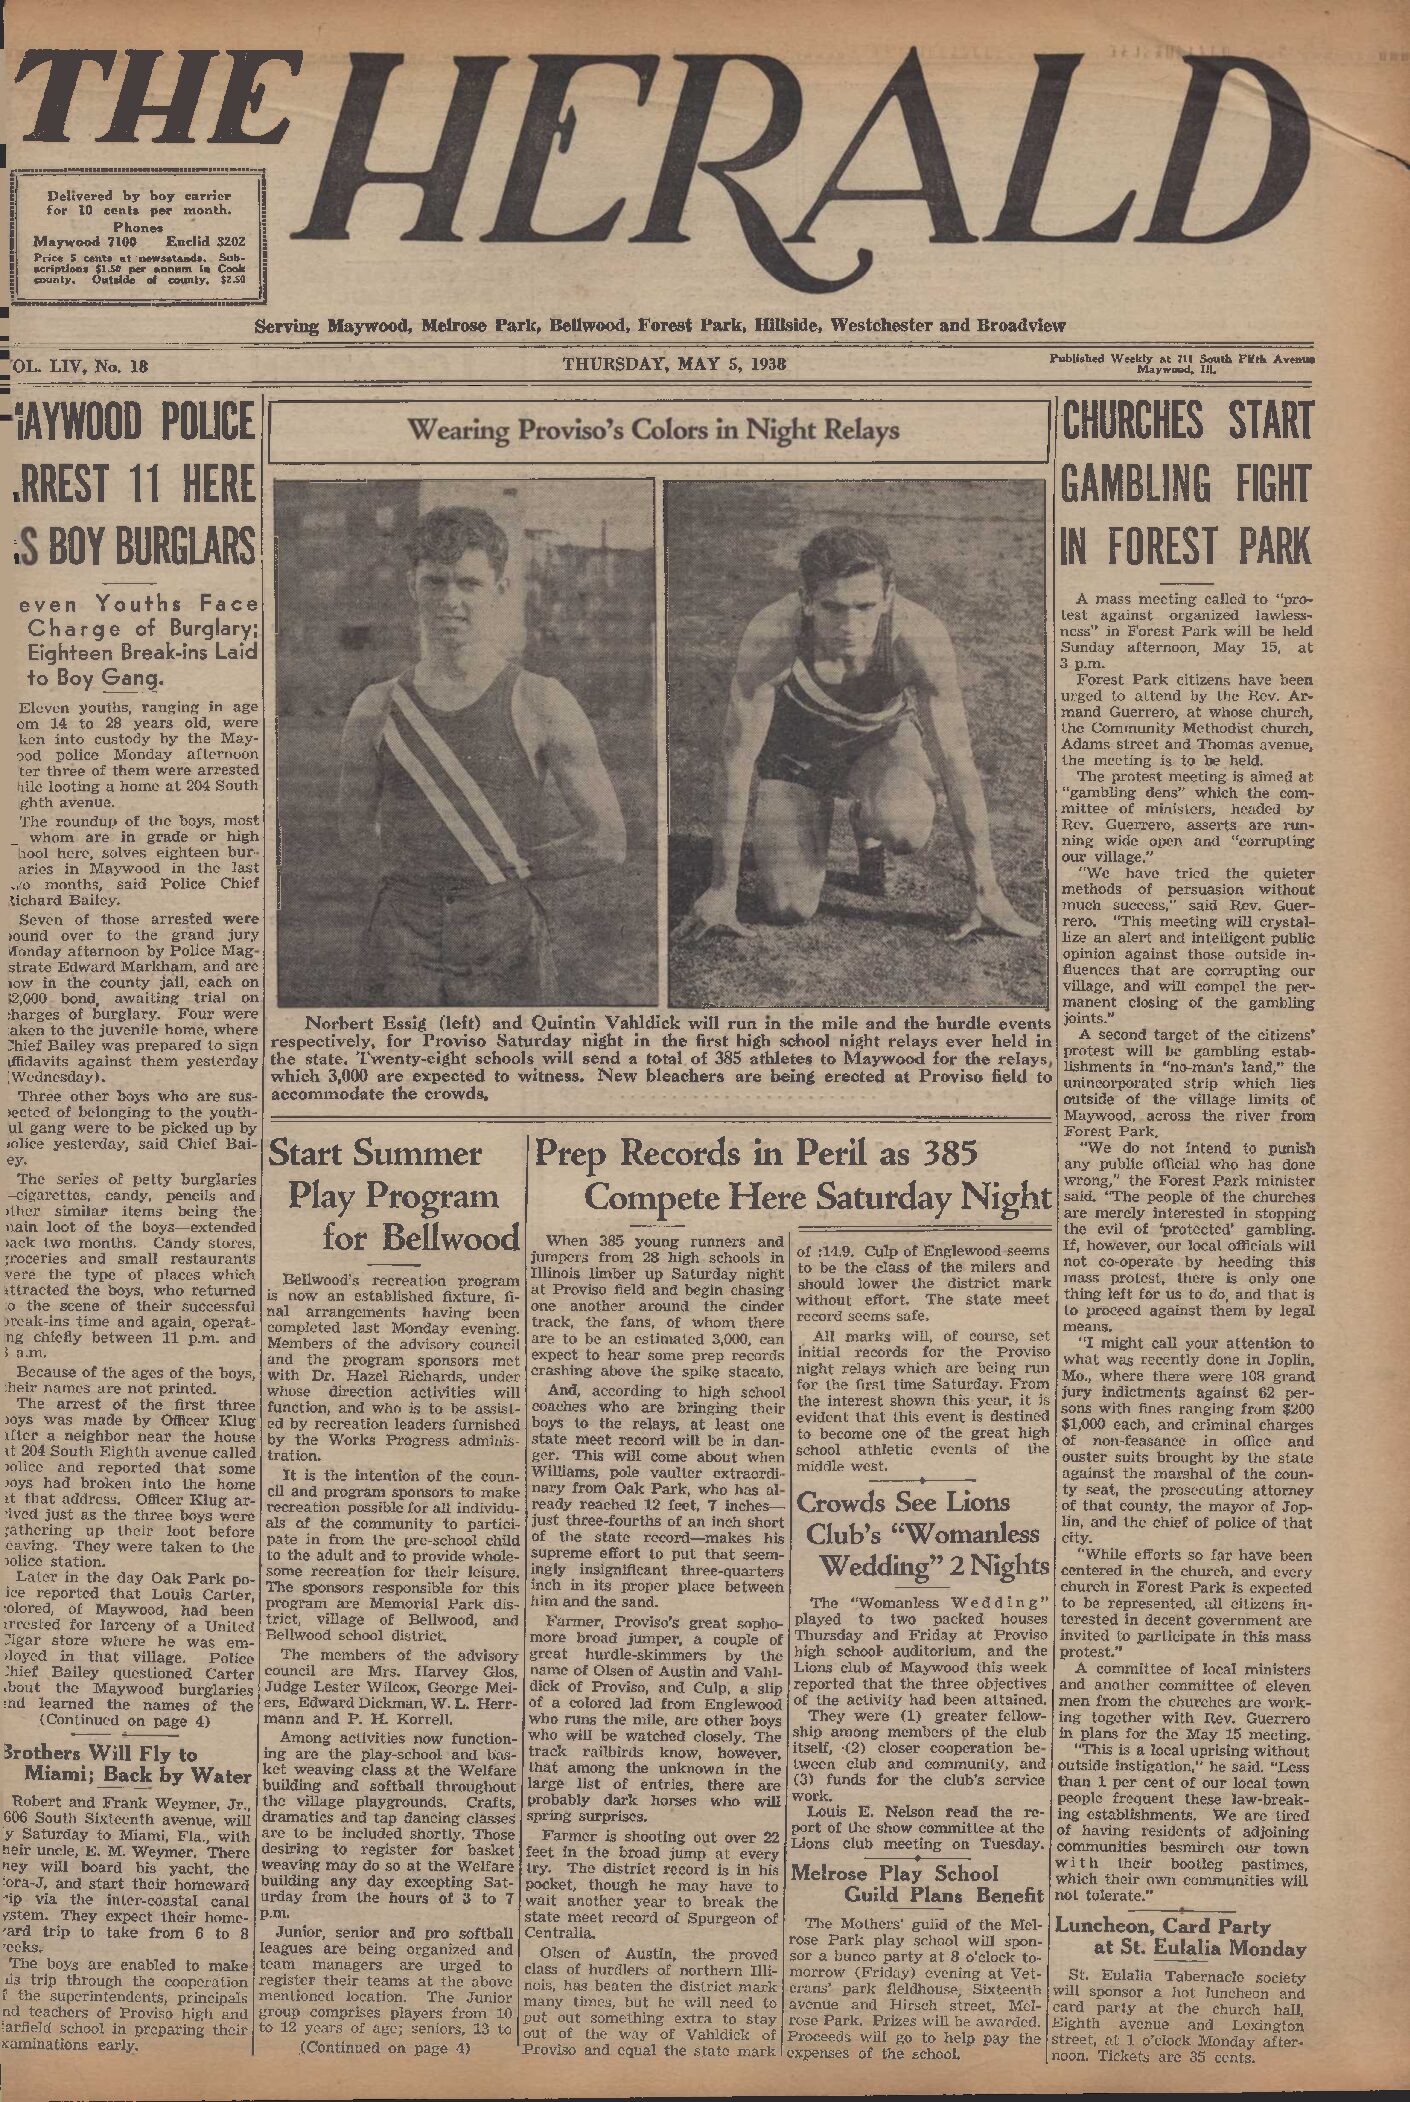 The Herald – 19380505